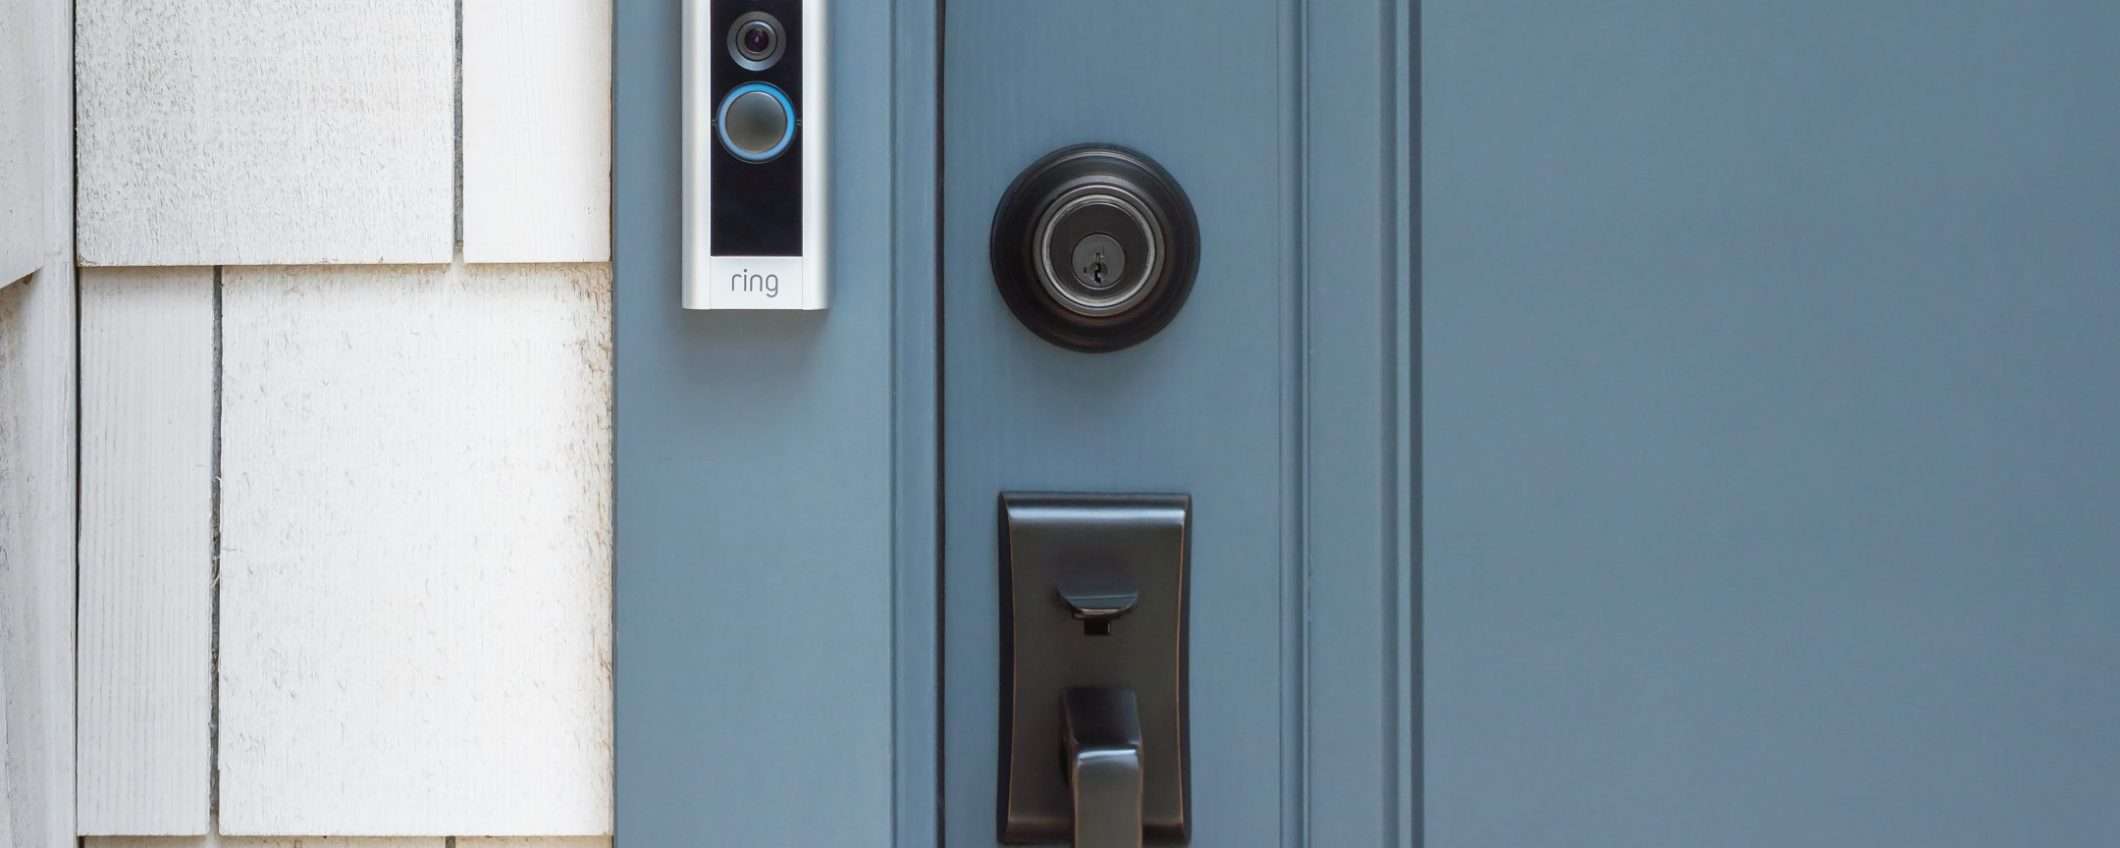 Ring Video Doorbell Pro: sconto di 80 euro su Amazon